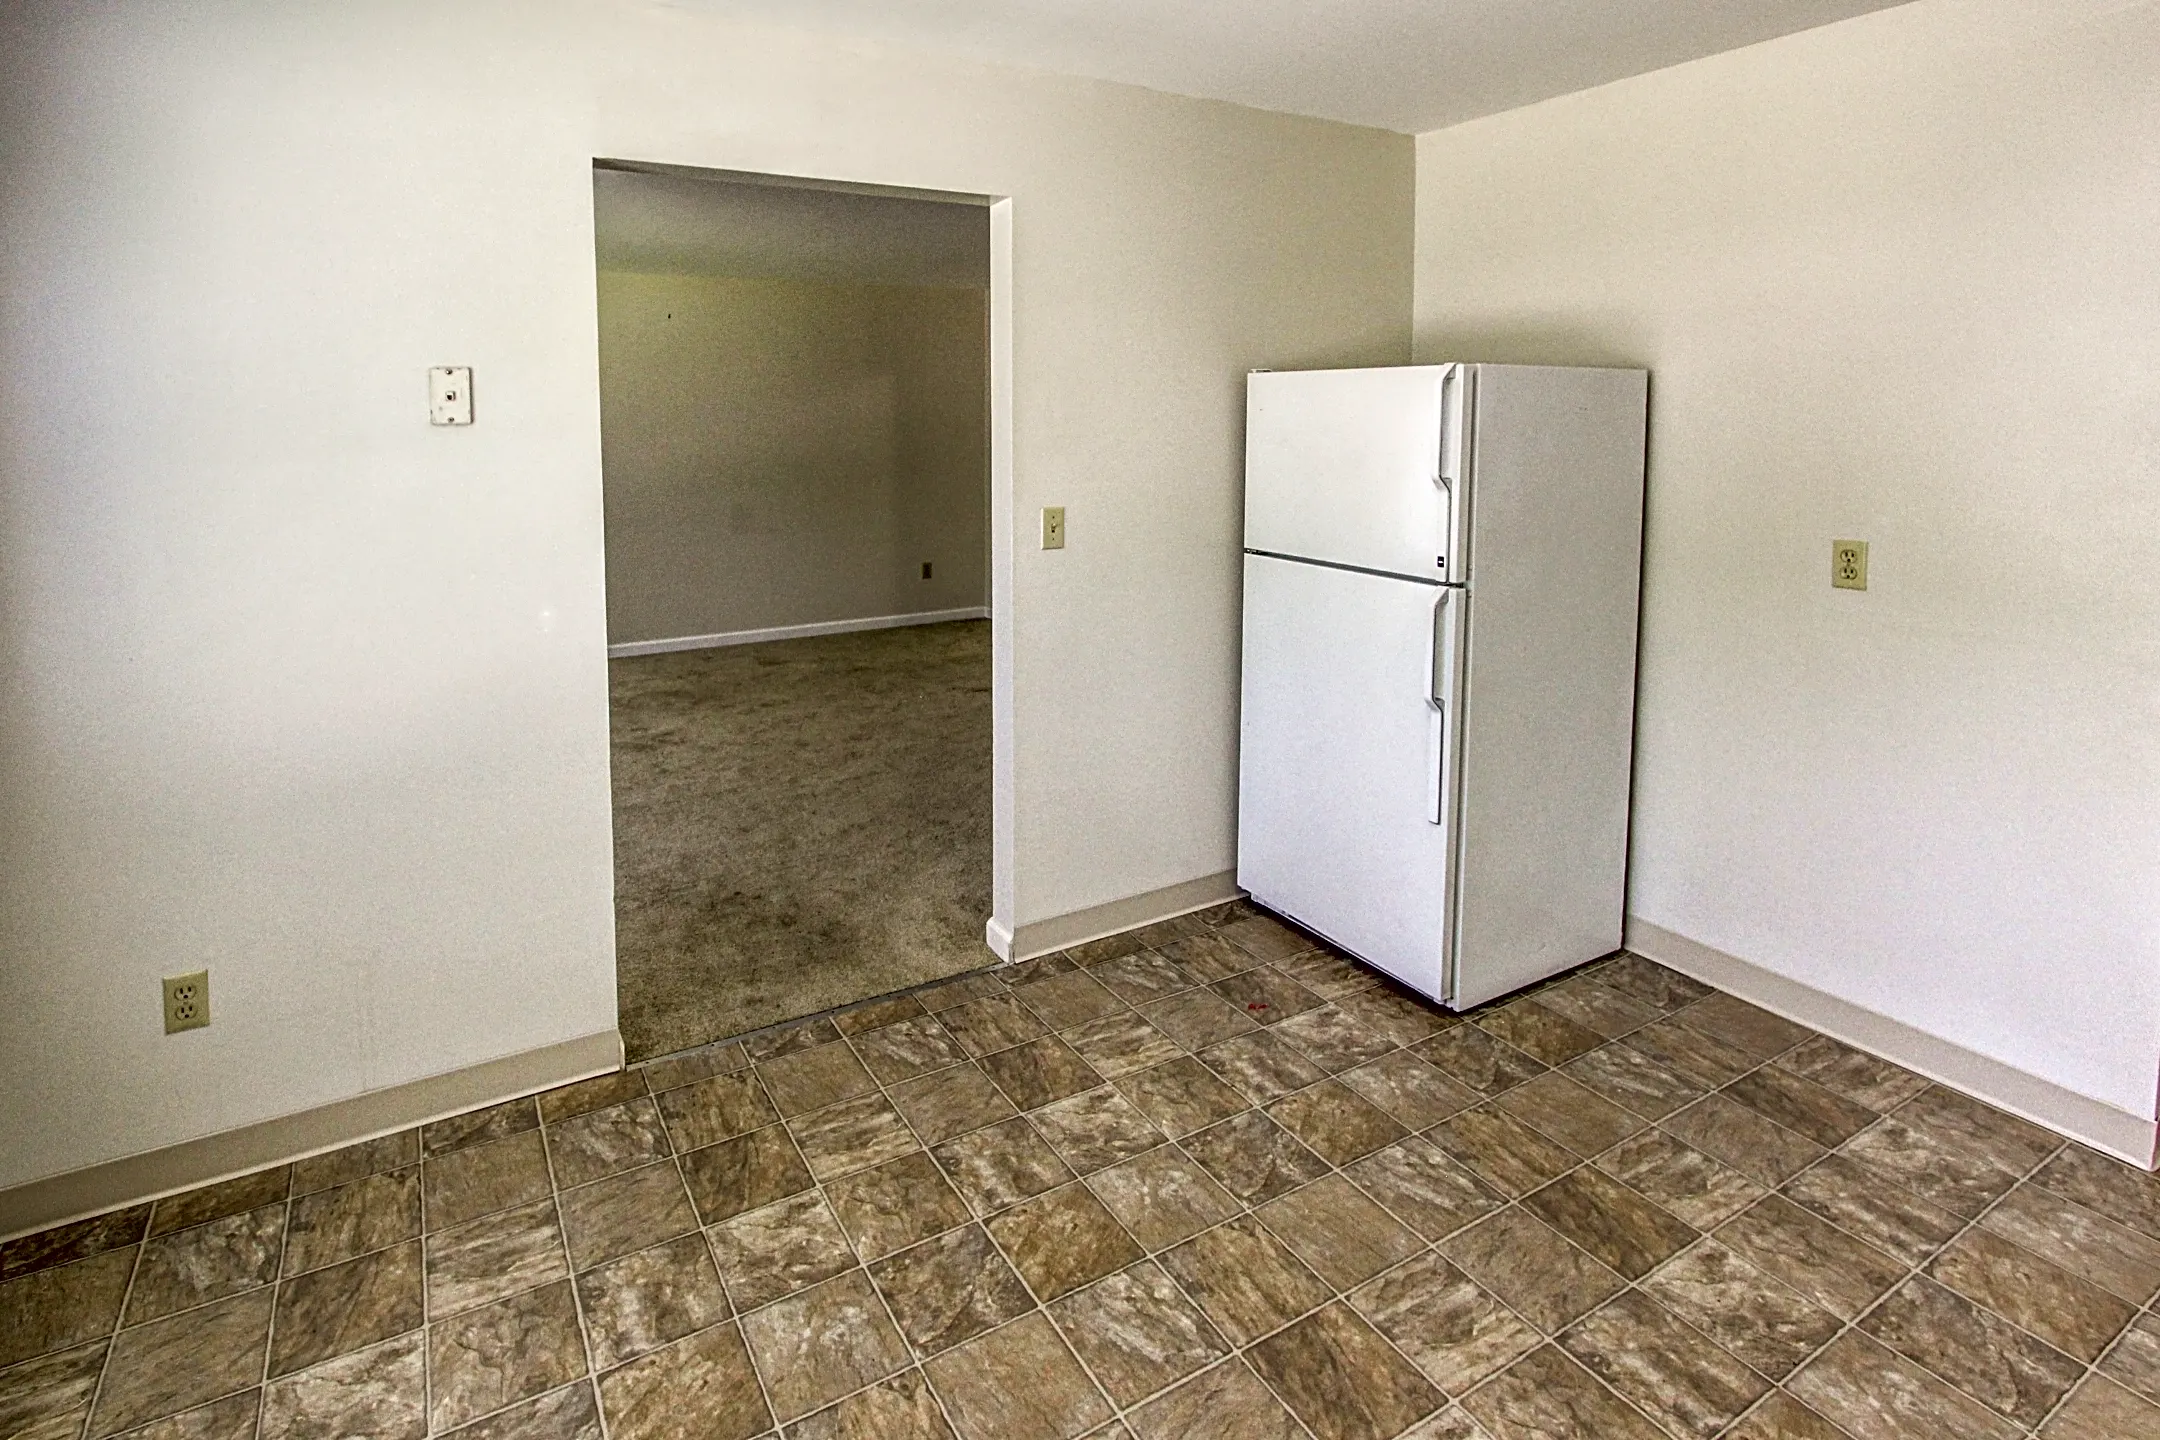 Kitchen - Marshfield Apartments - North Branford, CT